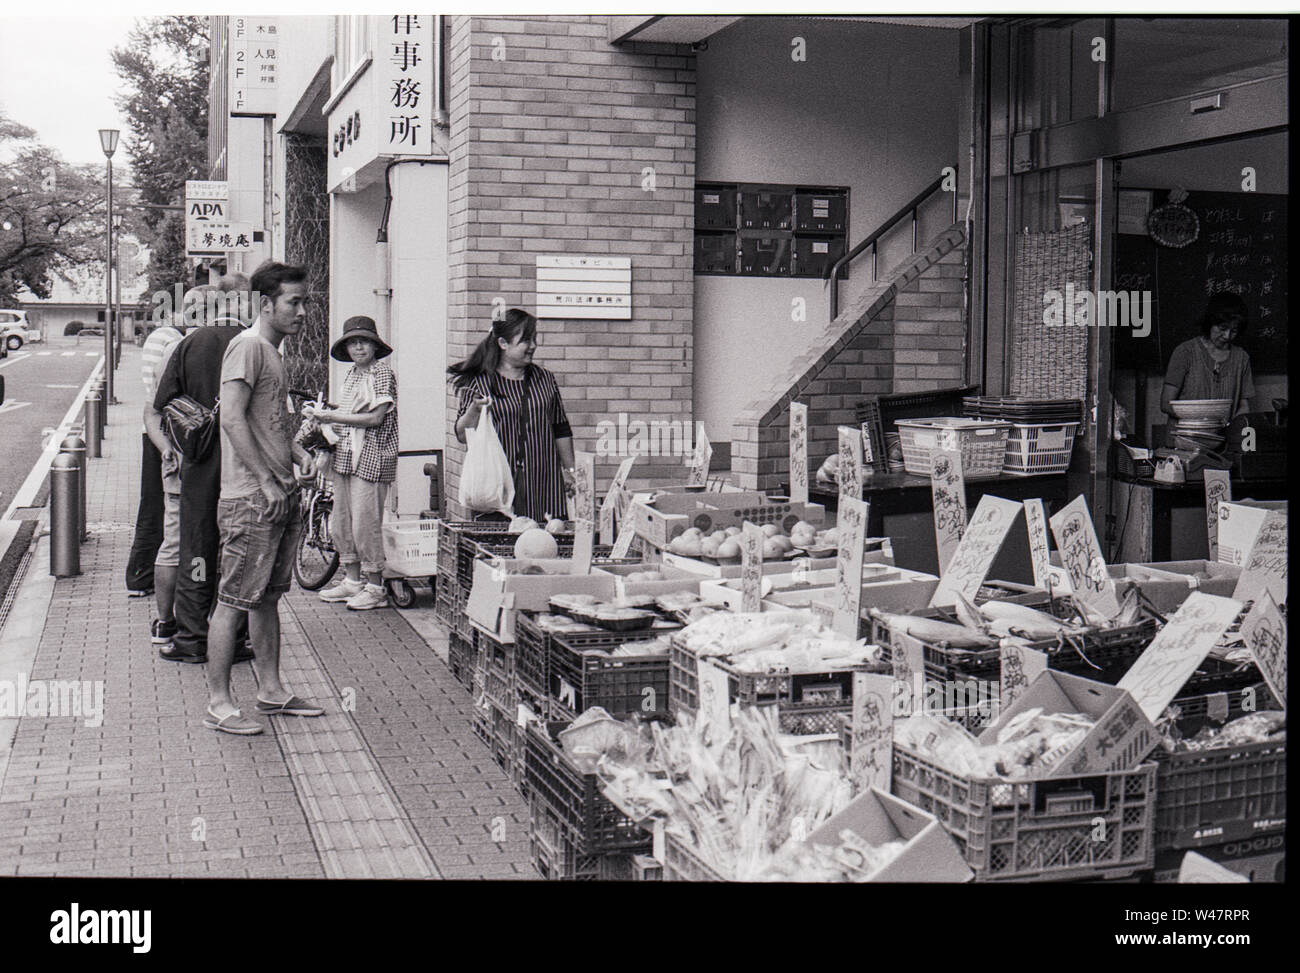 Fotografia analogica - Giappone Foto Stock